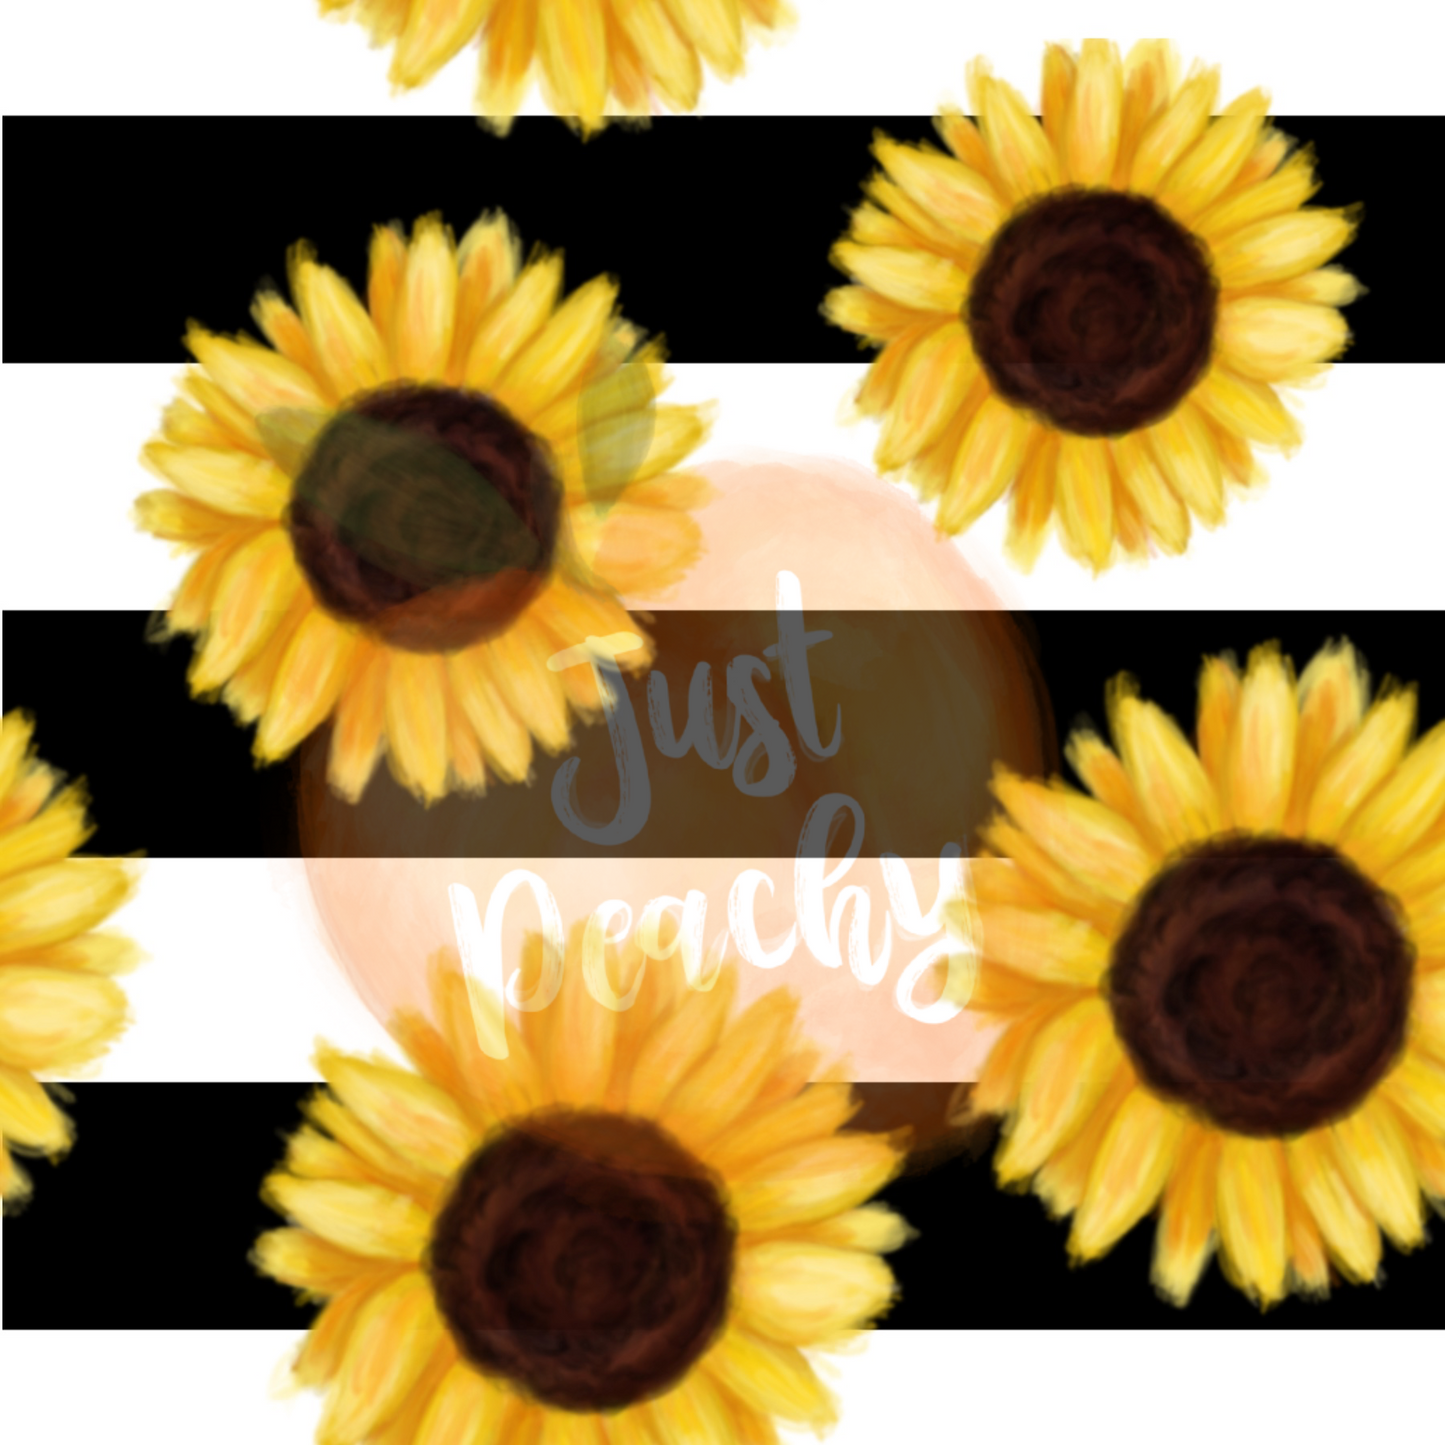 Sunflowers - Variations